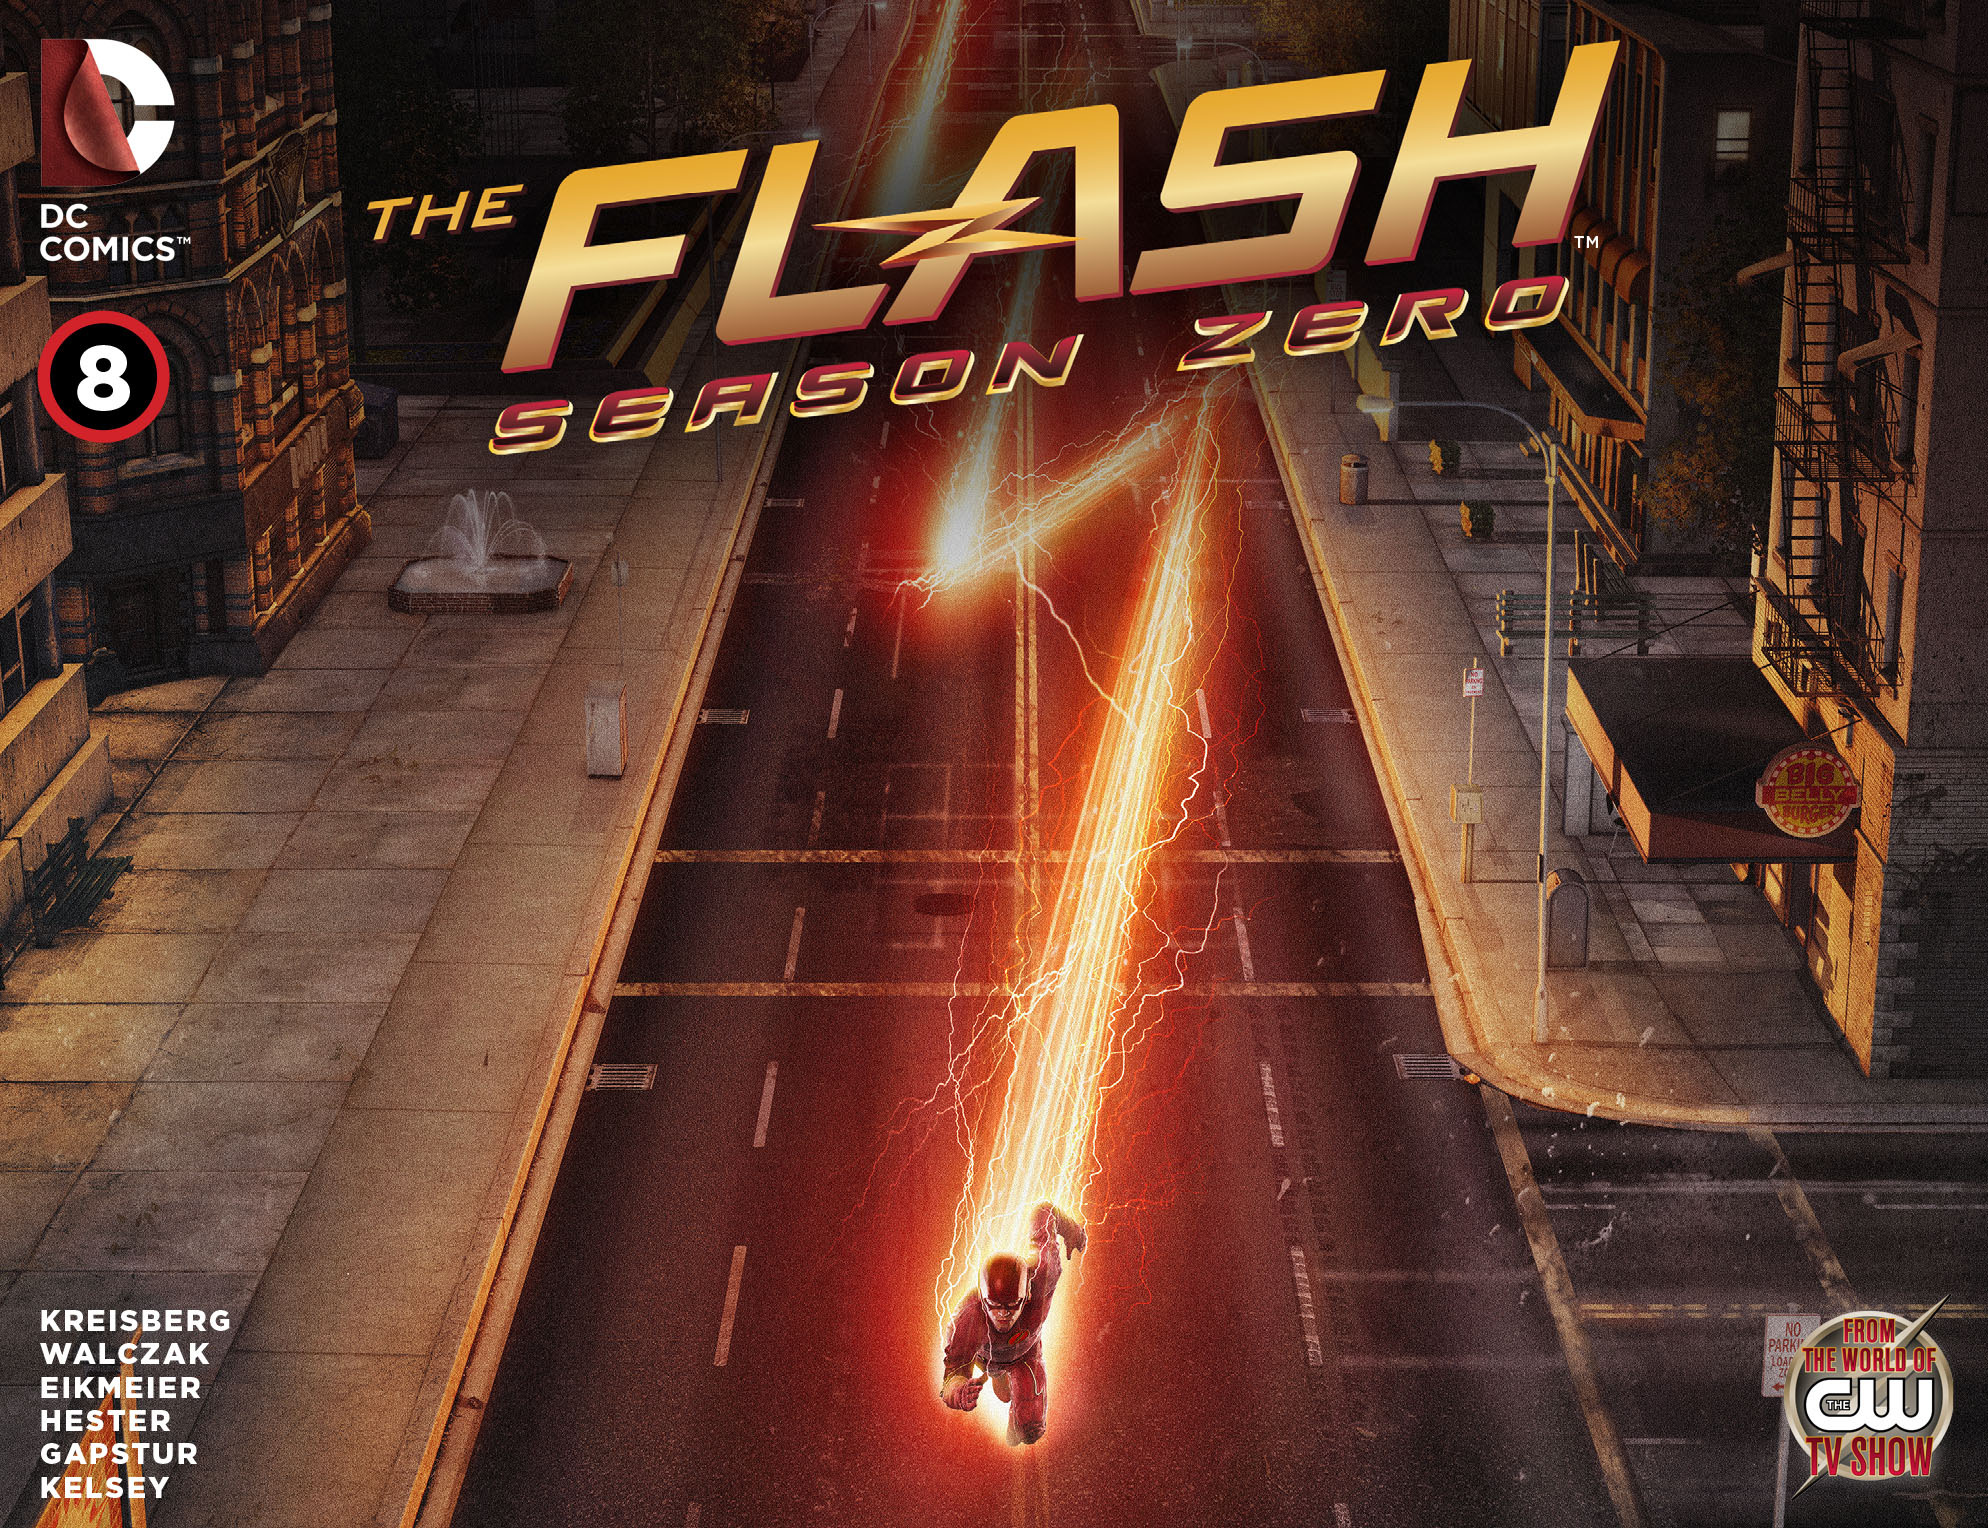 The Flash: Season Zero [I] issue 8 - Page 1